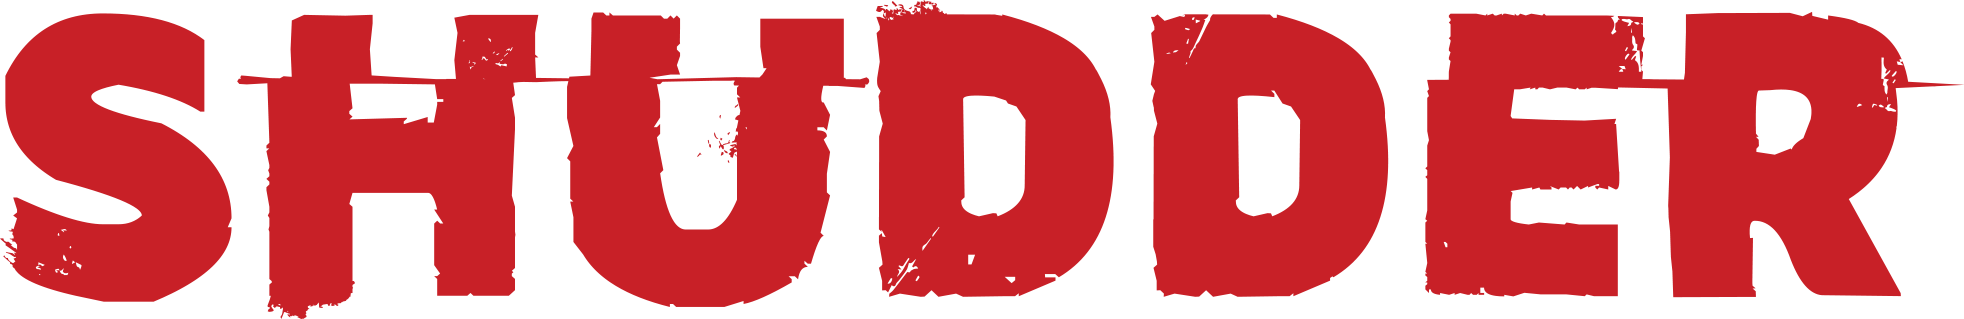 Shudder_Logo_red